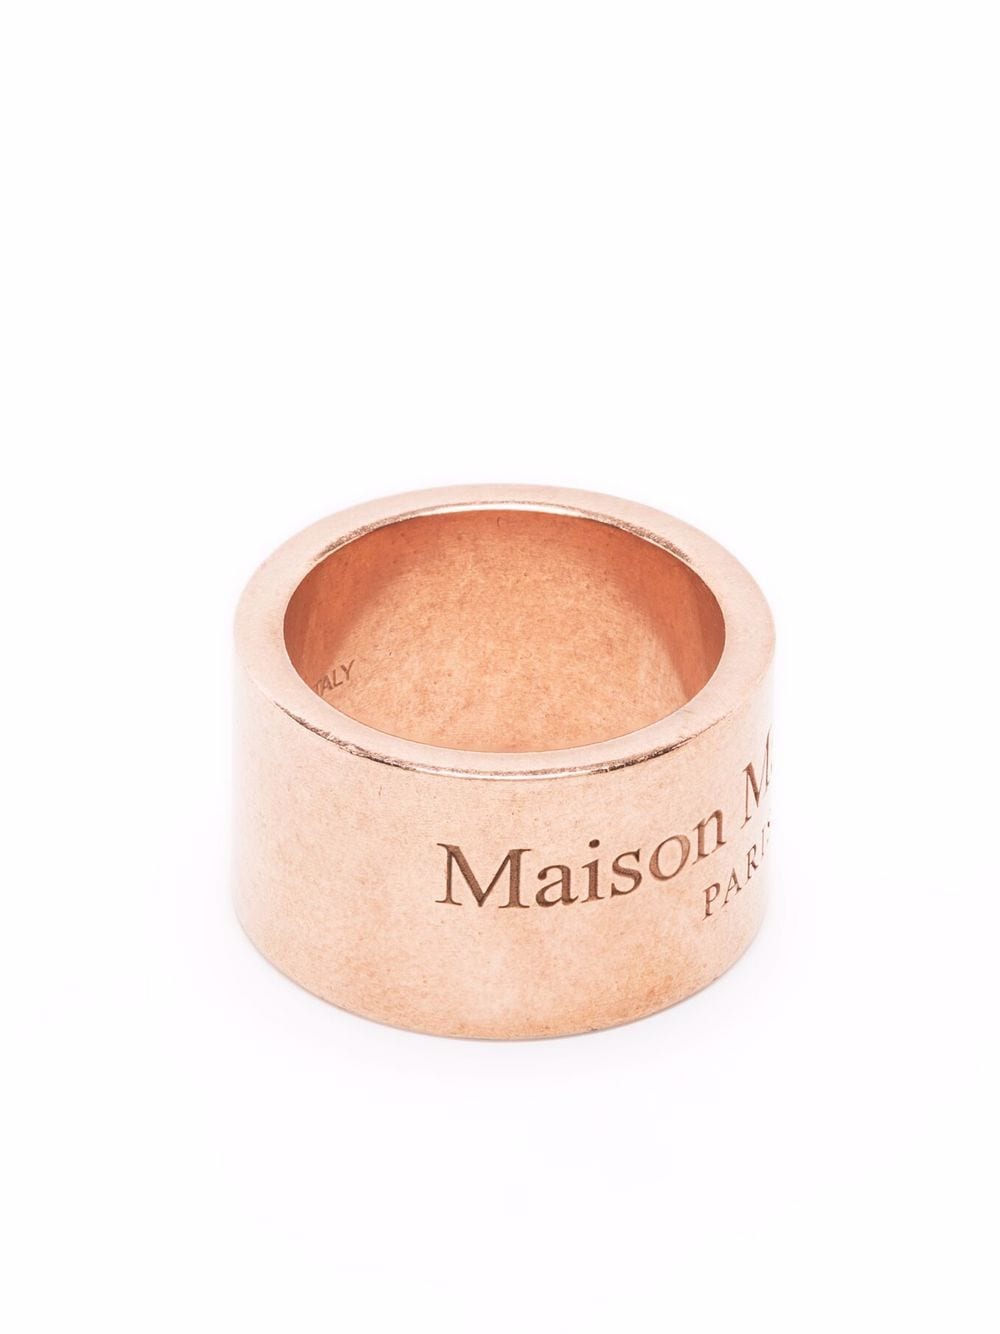 фото Maison margiela кольцо с логотипом